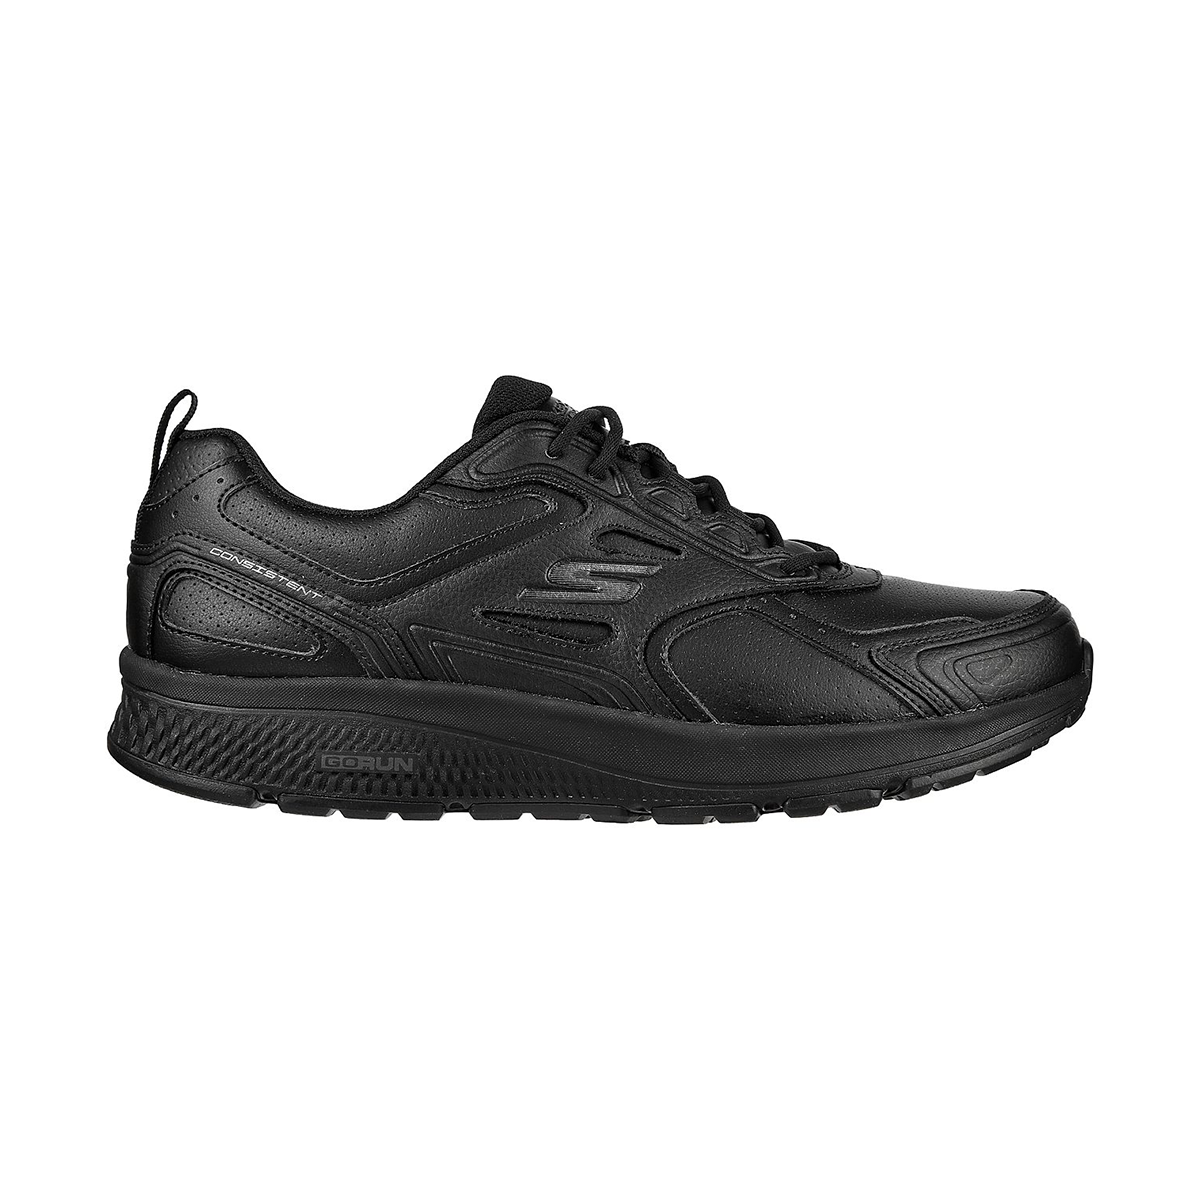 Skechers Go Run Consistent Shoes For Men, Black